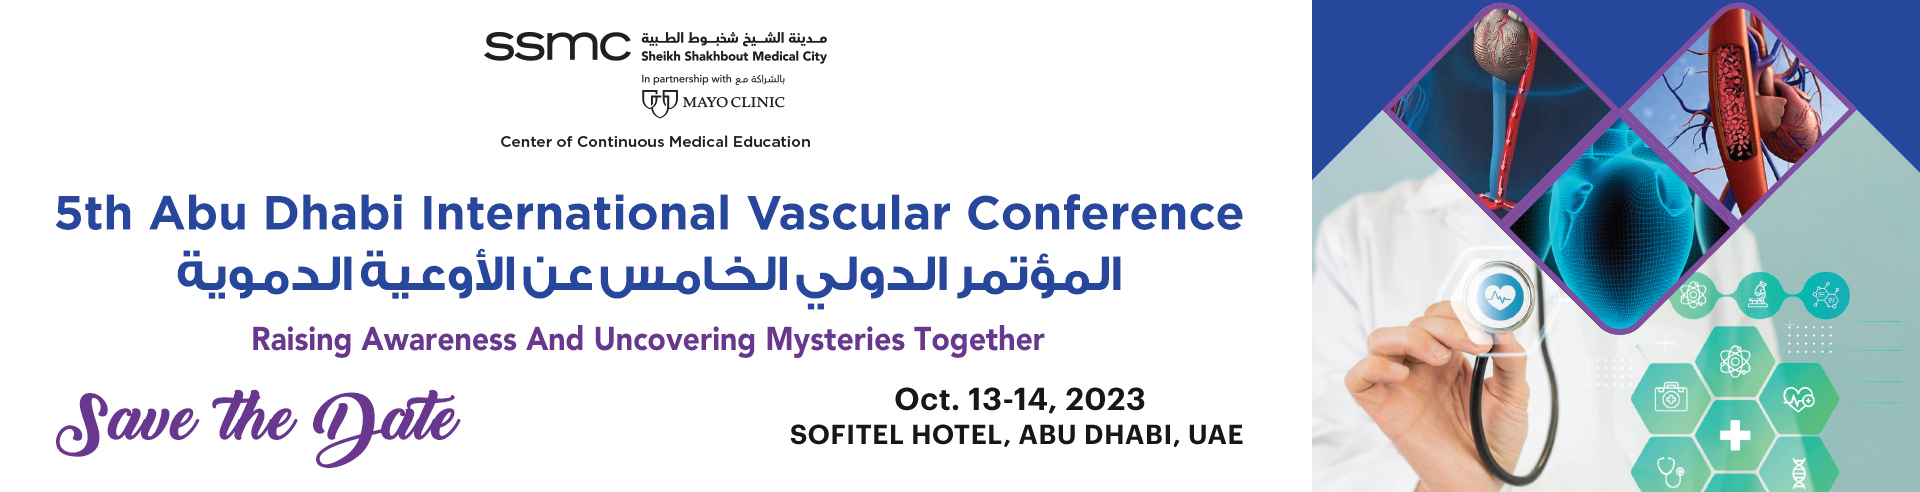 5TH ABU DHABI INTERNATIONAL VASCULAR CONFERENCE